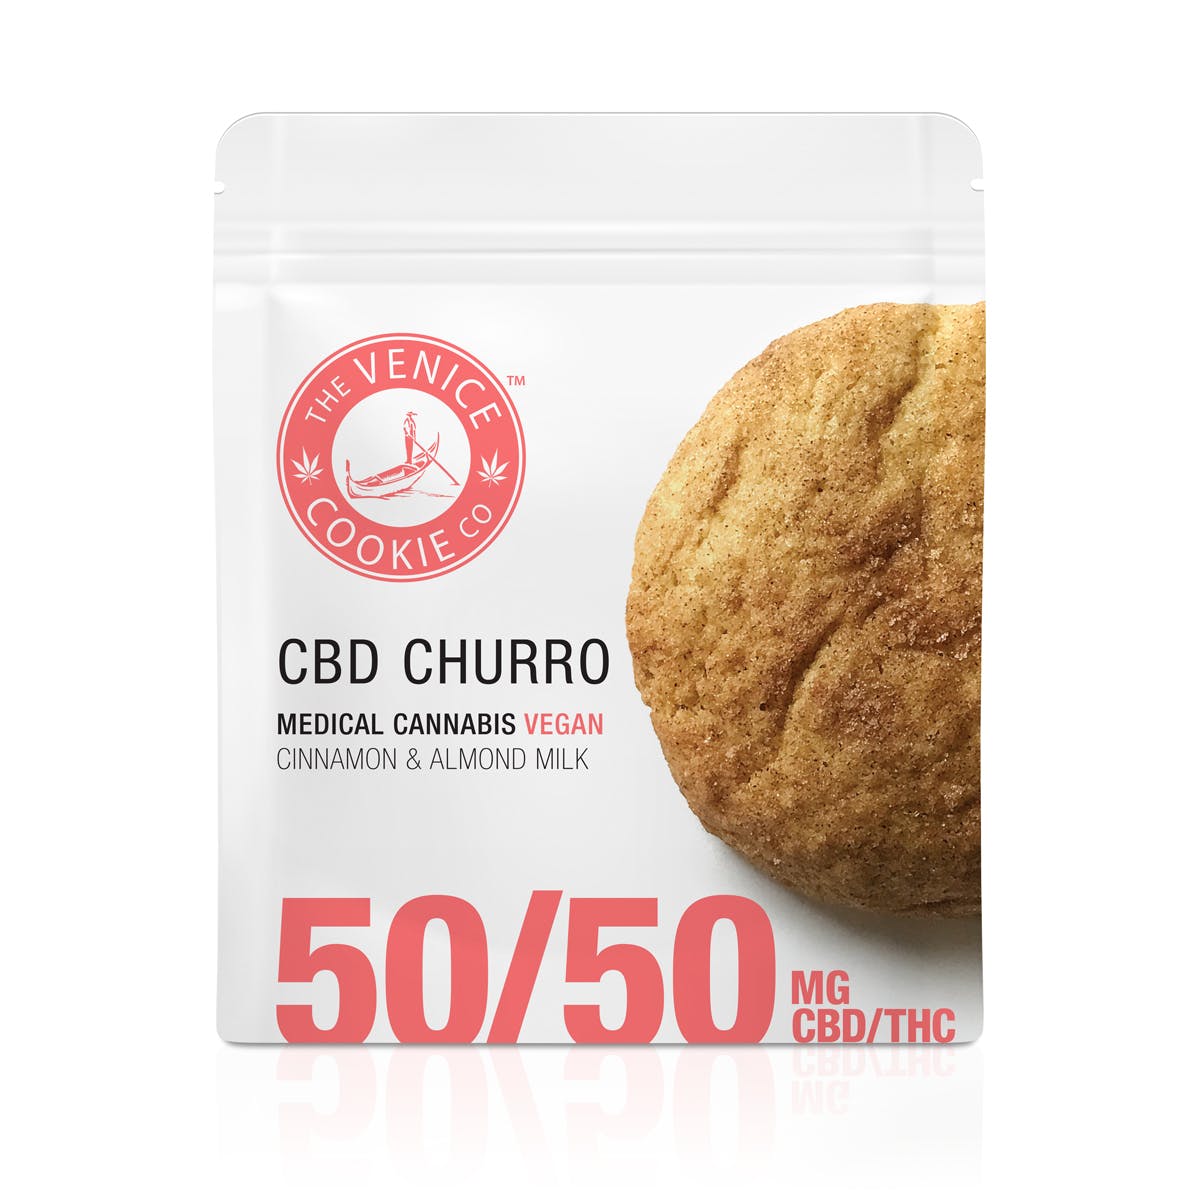 CBD Churro Cookie - 50/50